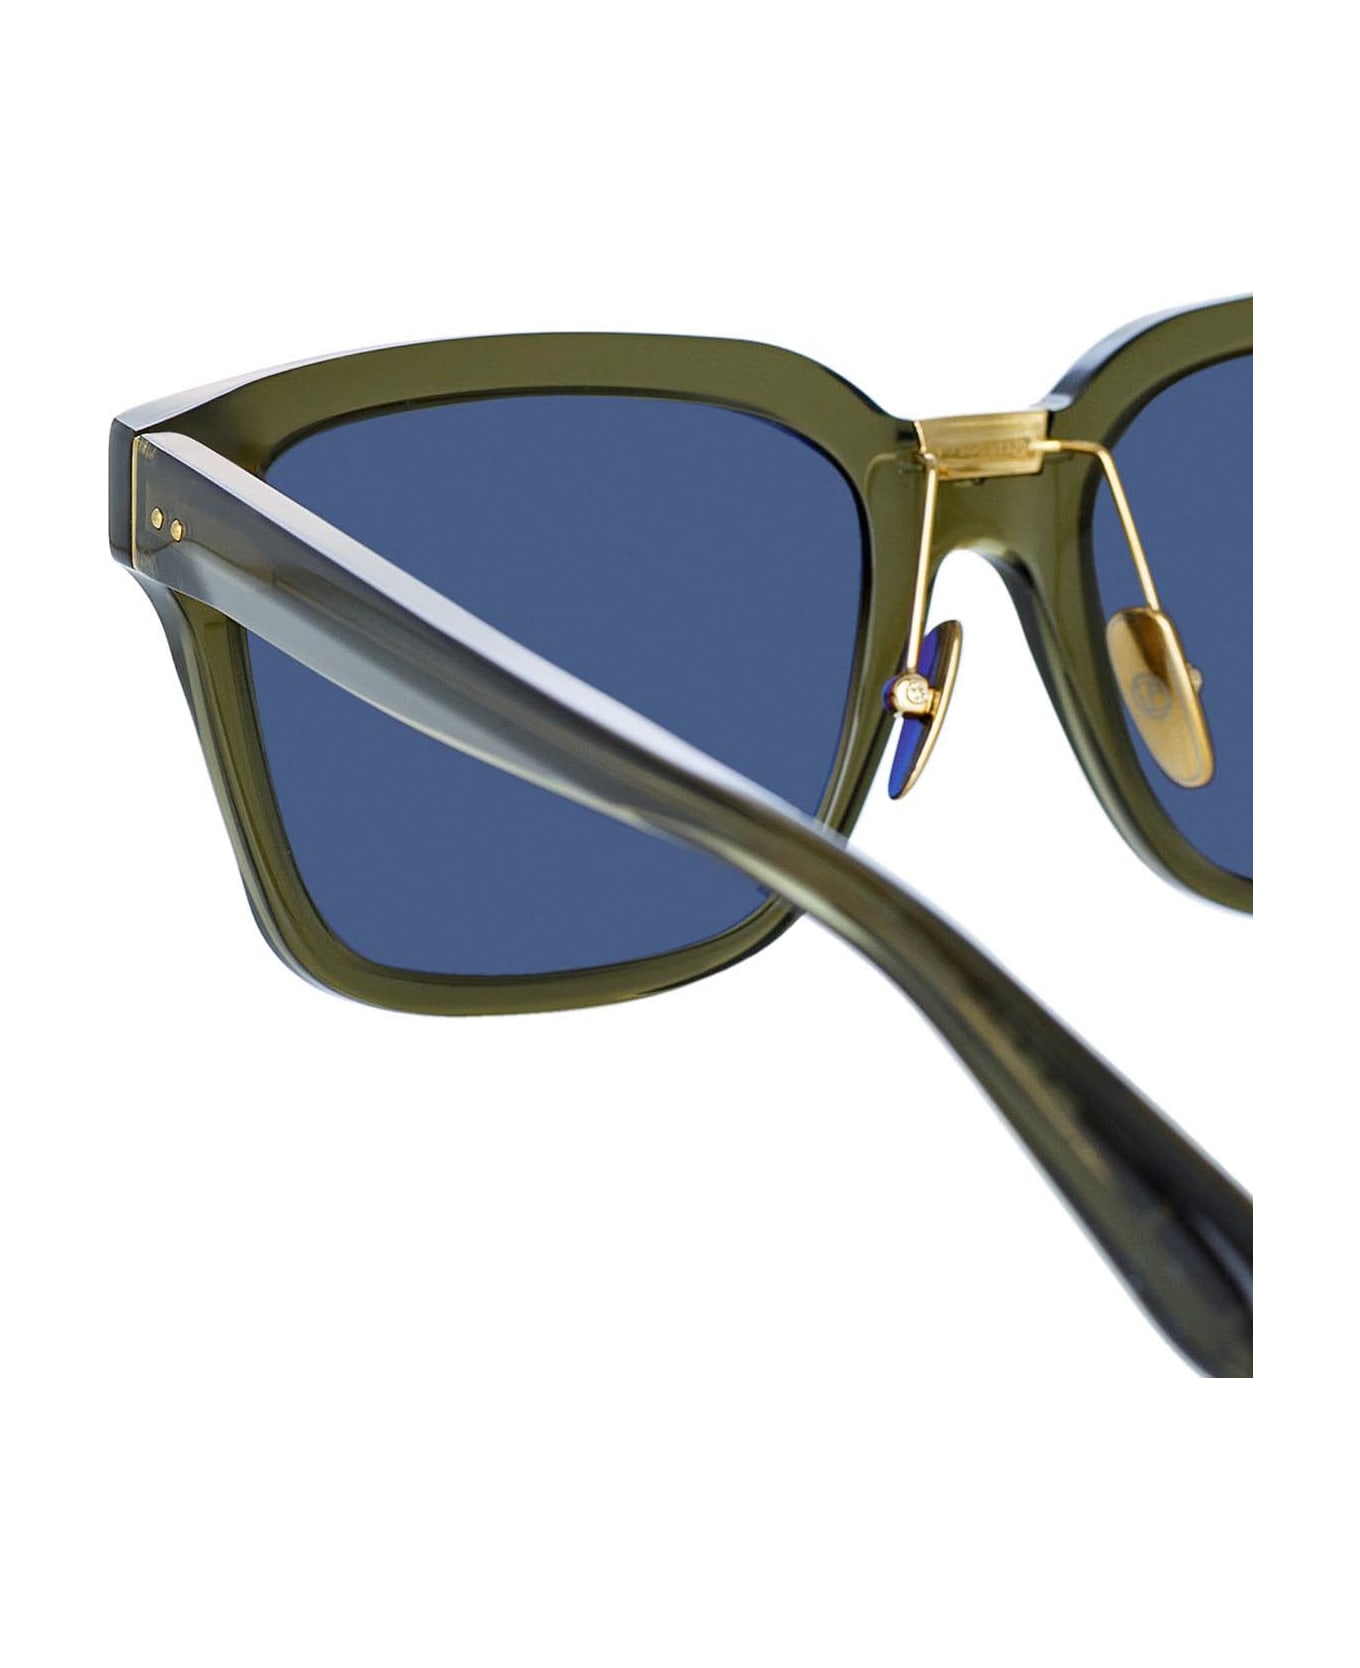 Linda Farrow Lfl1322 Translucent Green / Light Gold Sunglasses - Translucent Green / Light Gold サングラス